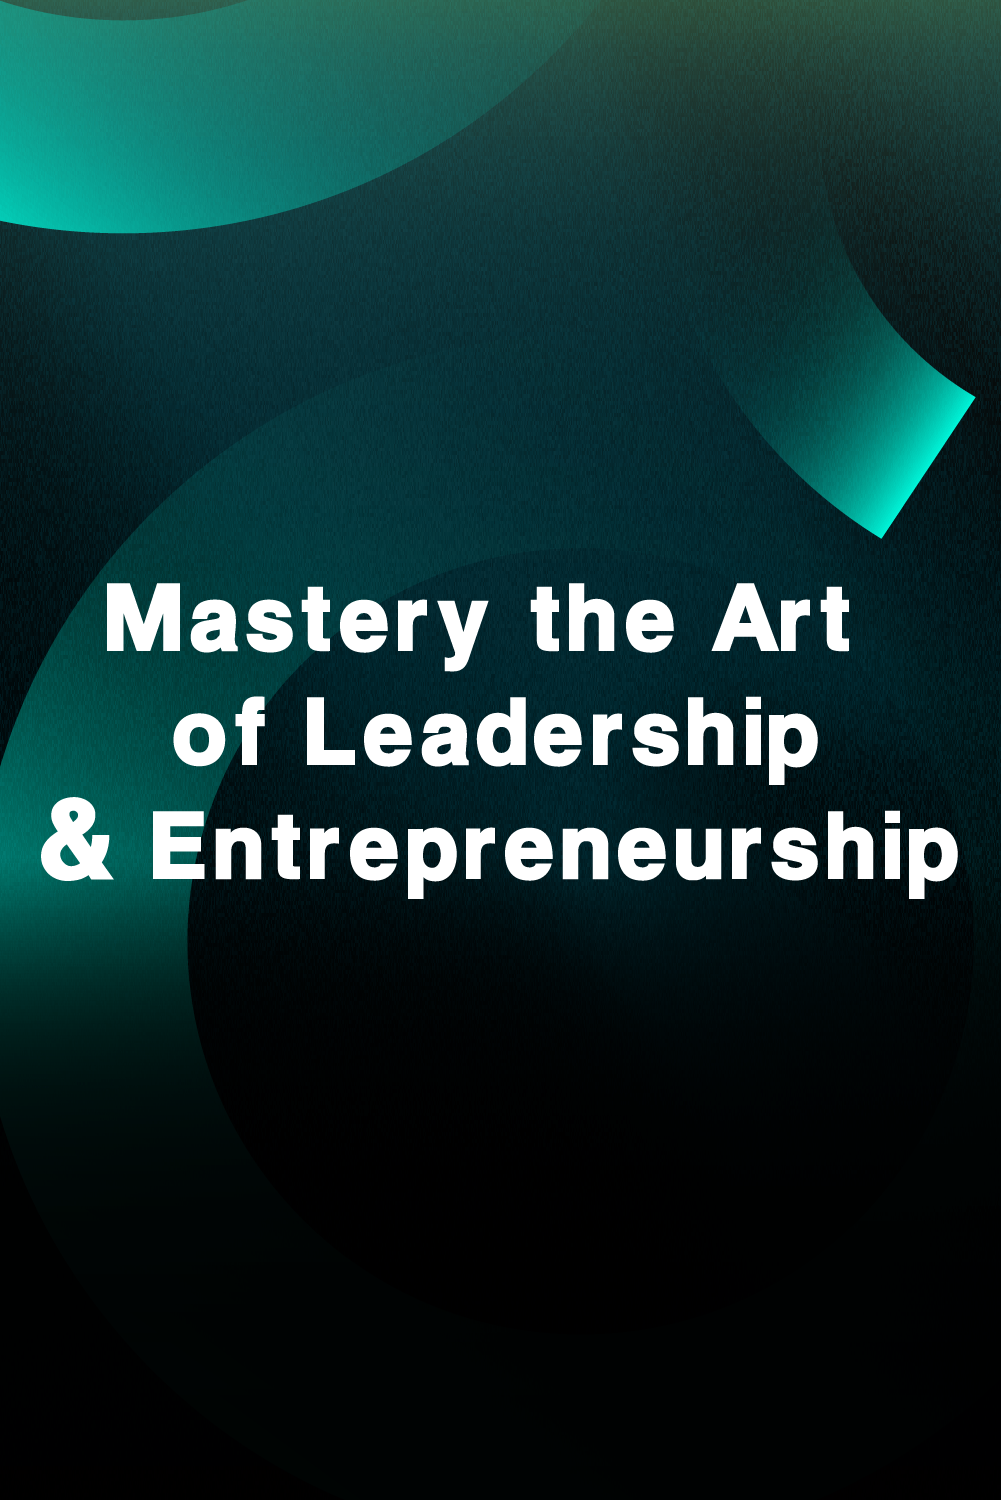 Mastery the Art of Leadership & Entrepreneur